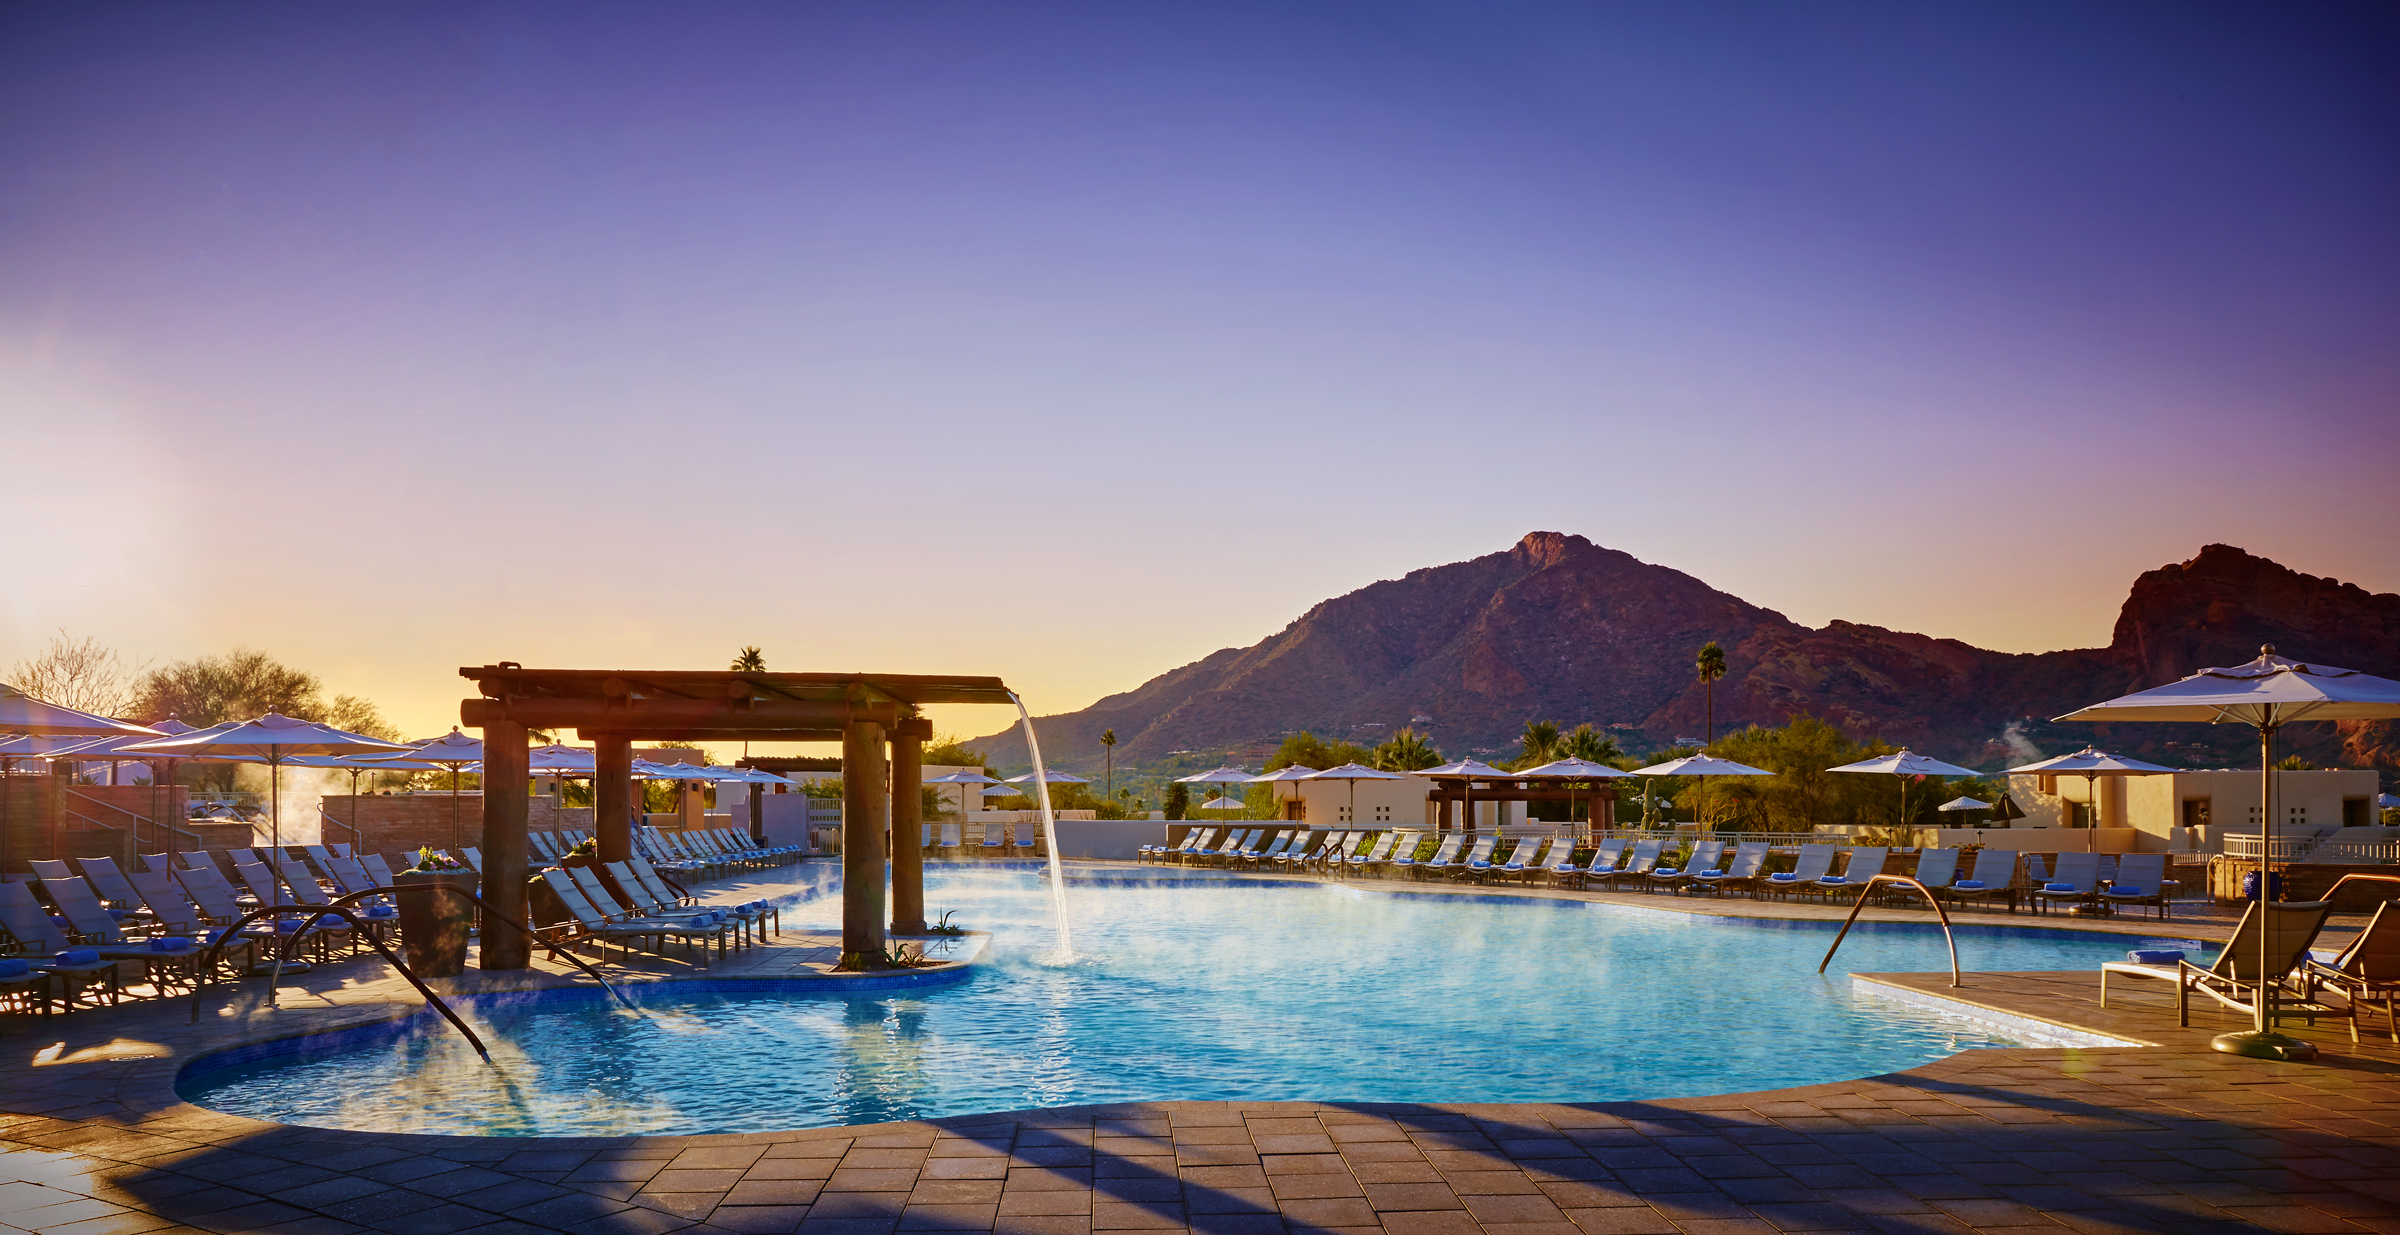 Camelback Inn Resort & Spa Scottsdale Epitomizes Southwest Hospitality